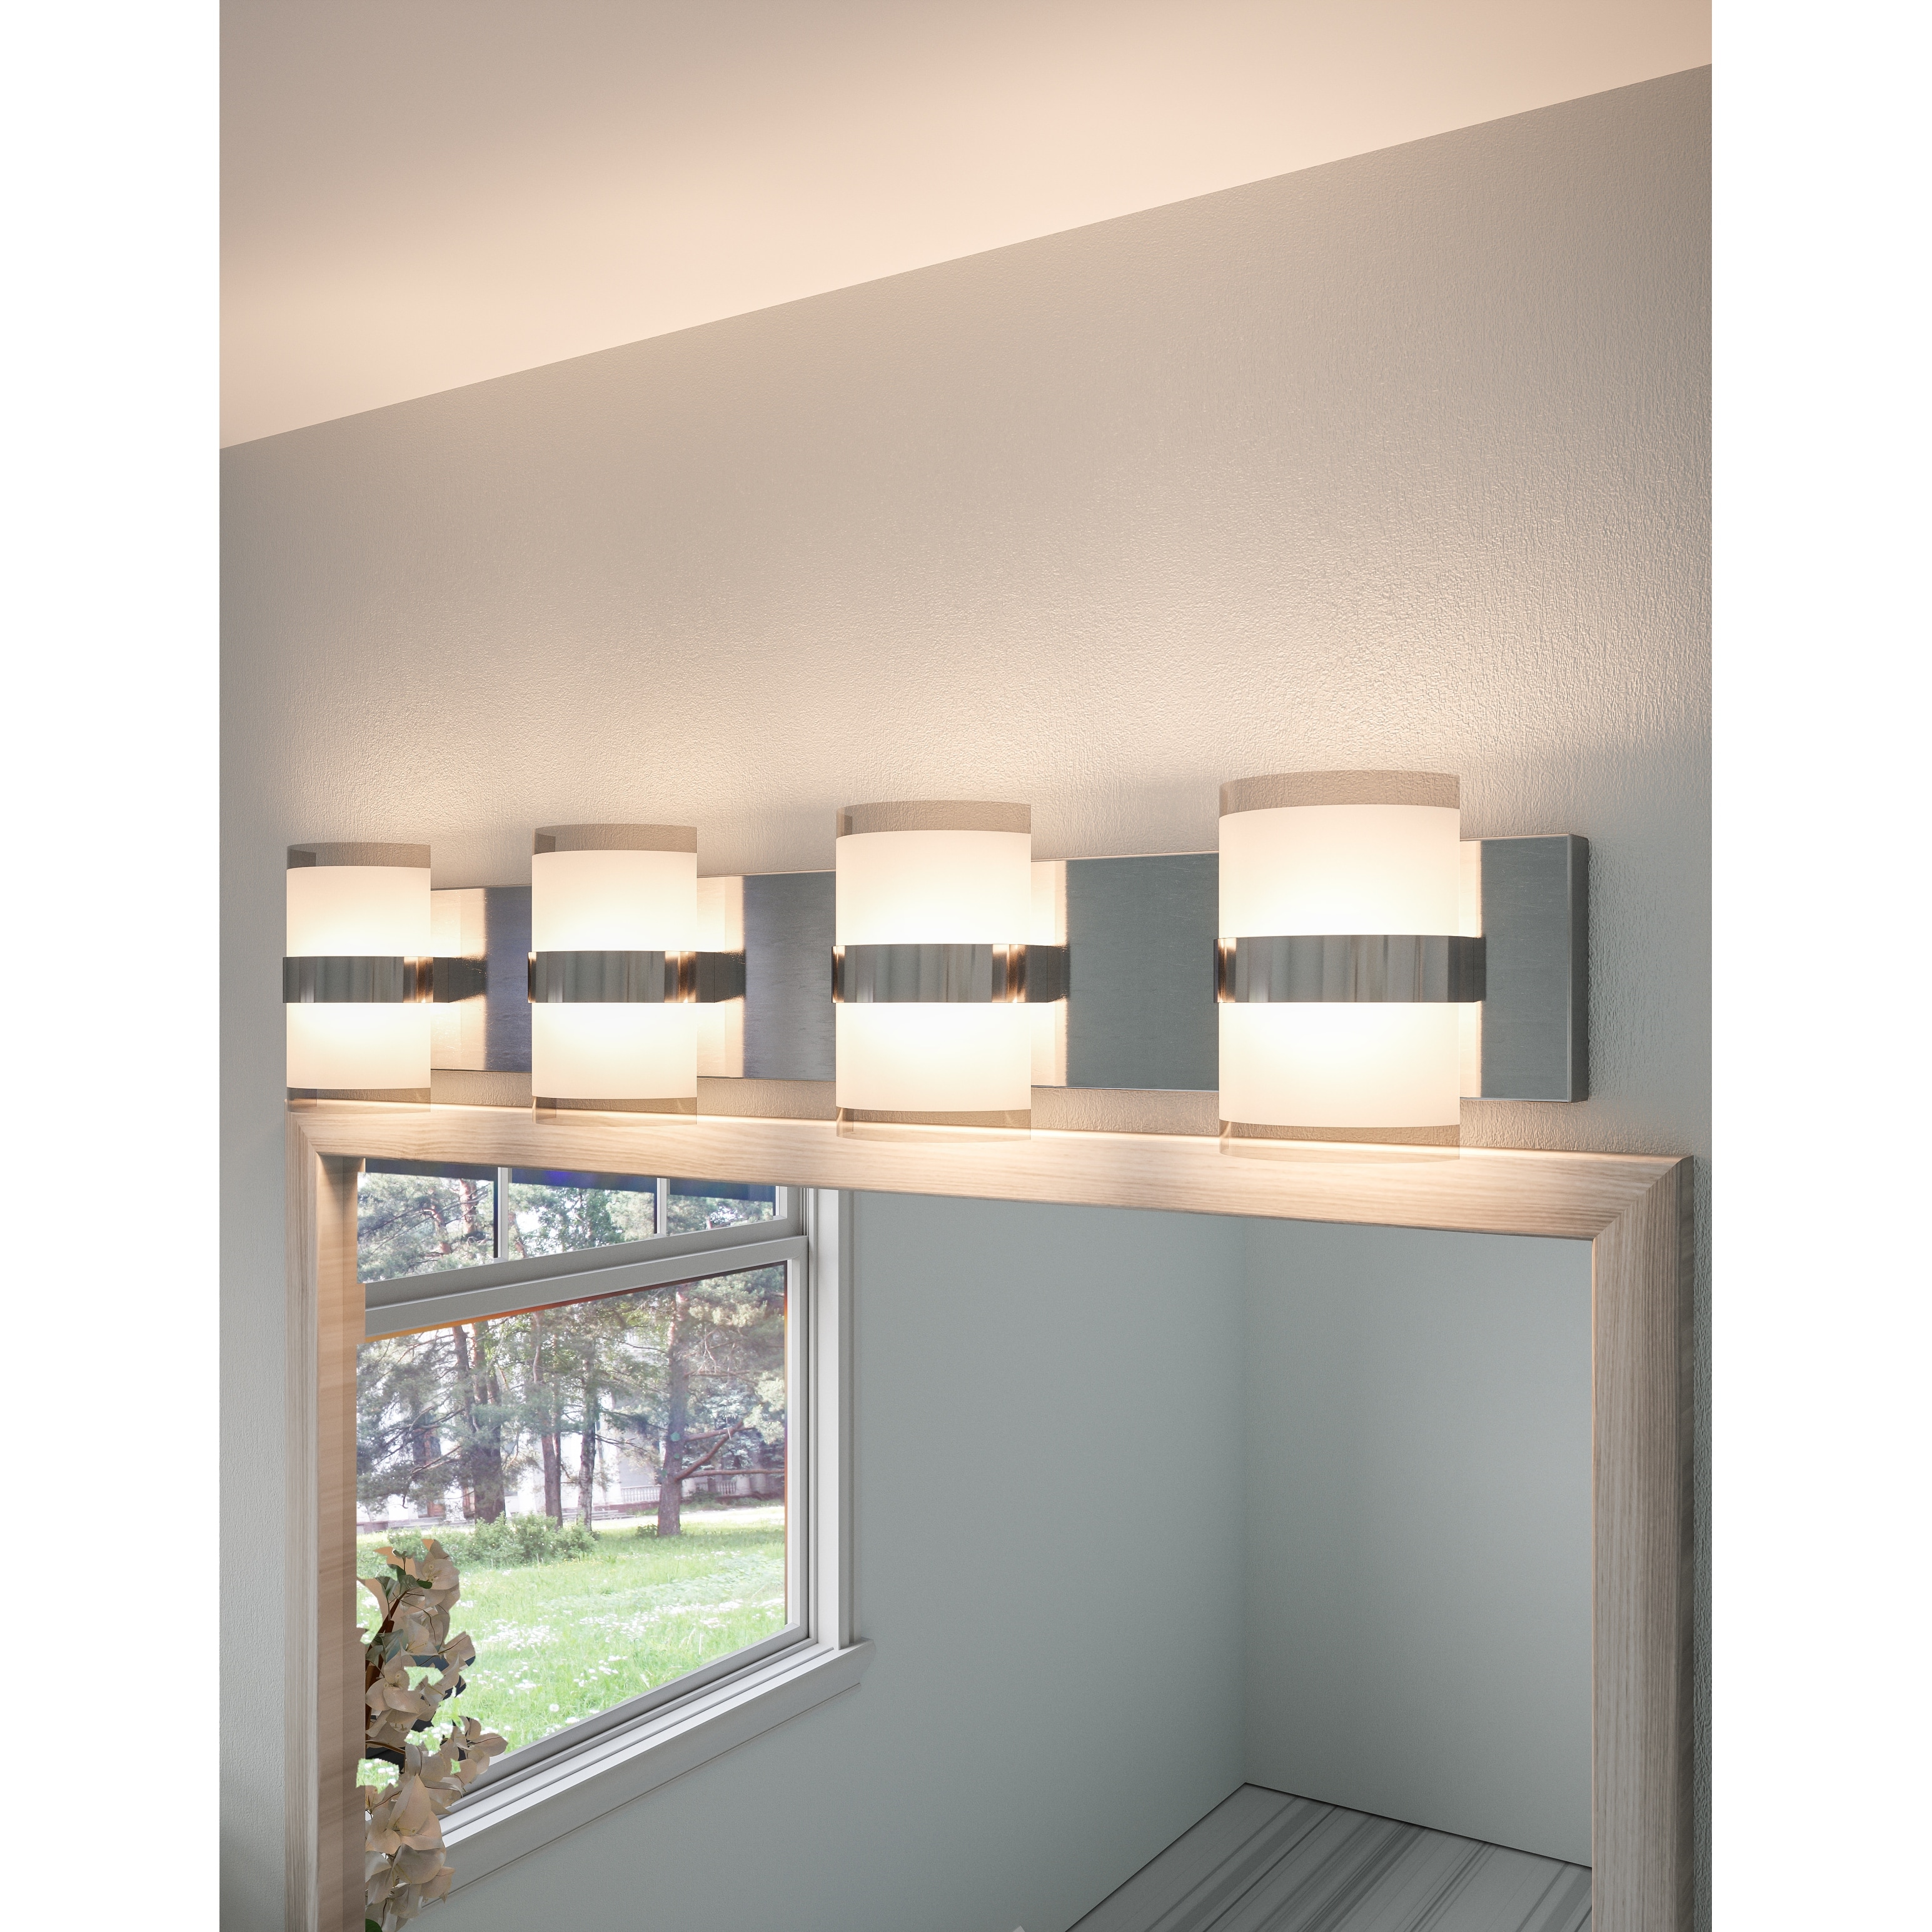 Design House Haswell Traditional LED 4-Light Indoor Bathroom Vanity Light  On Sale Bed Bath  Beyond 37007849